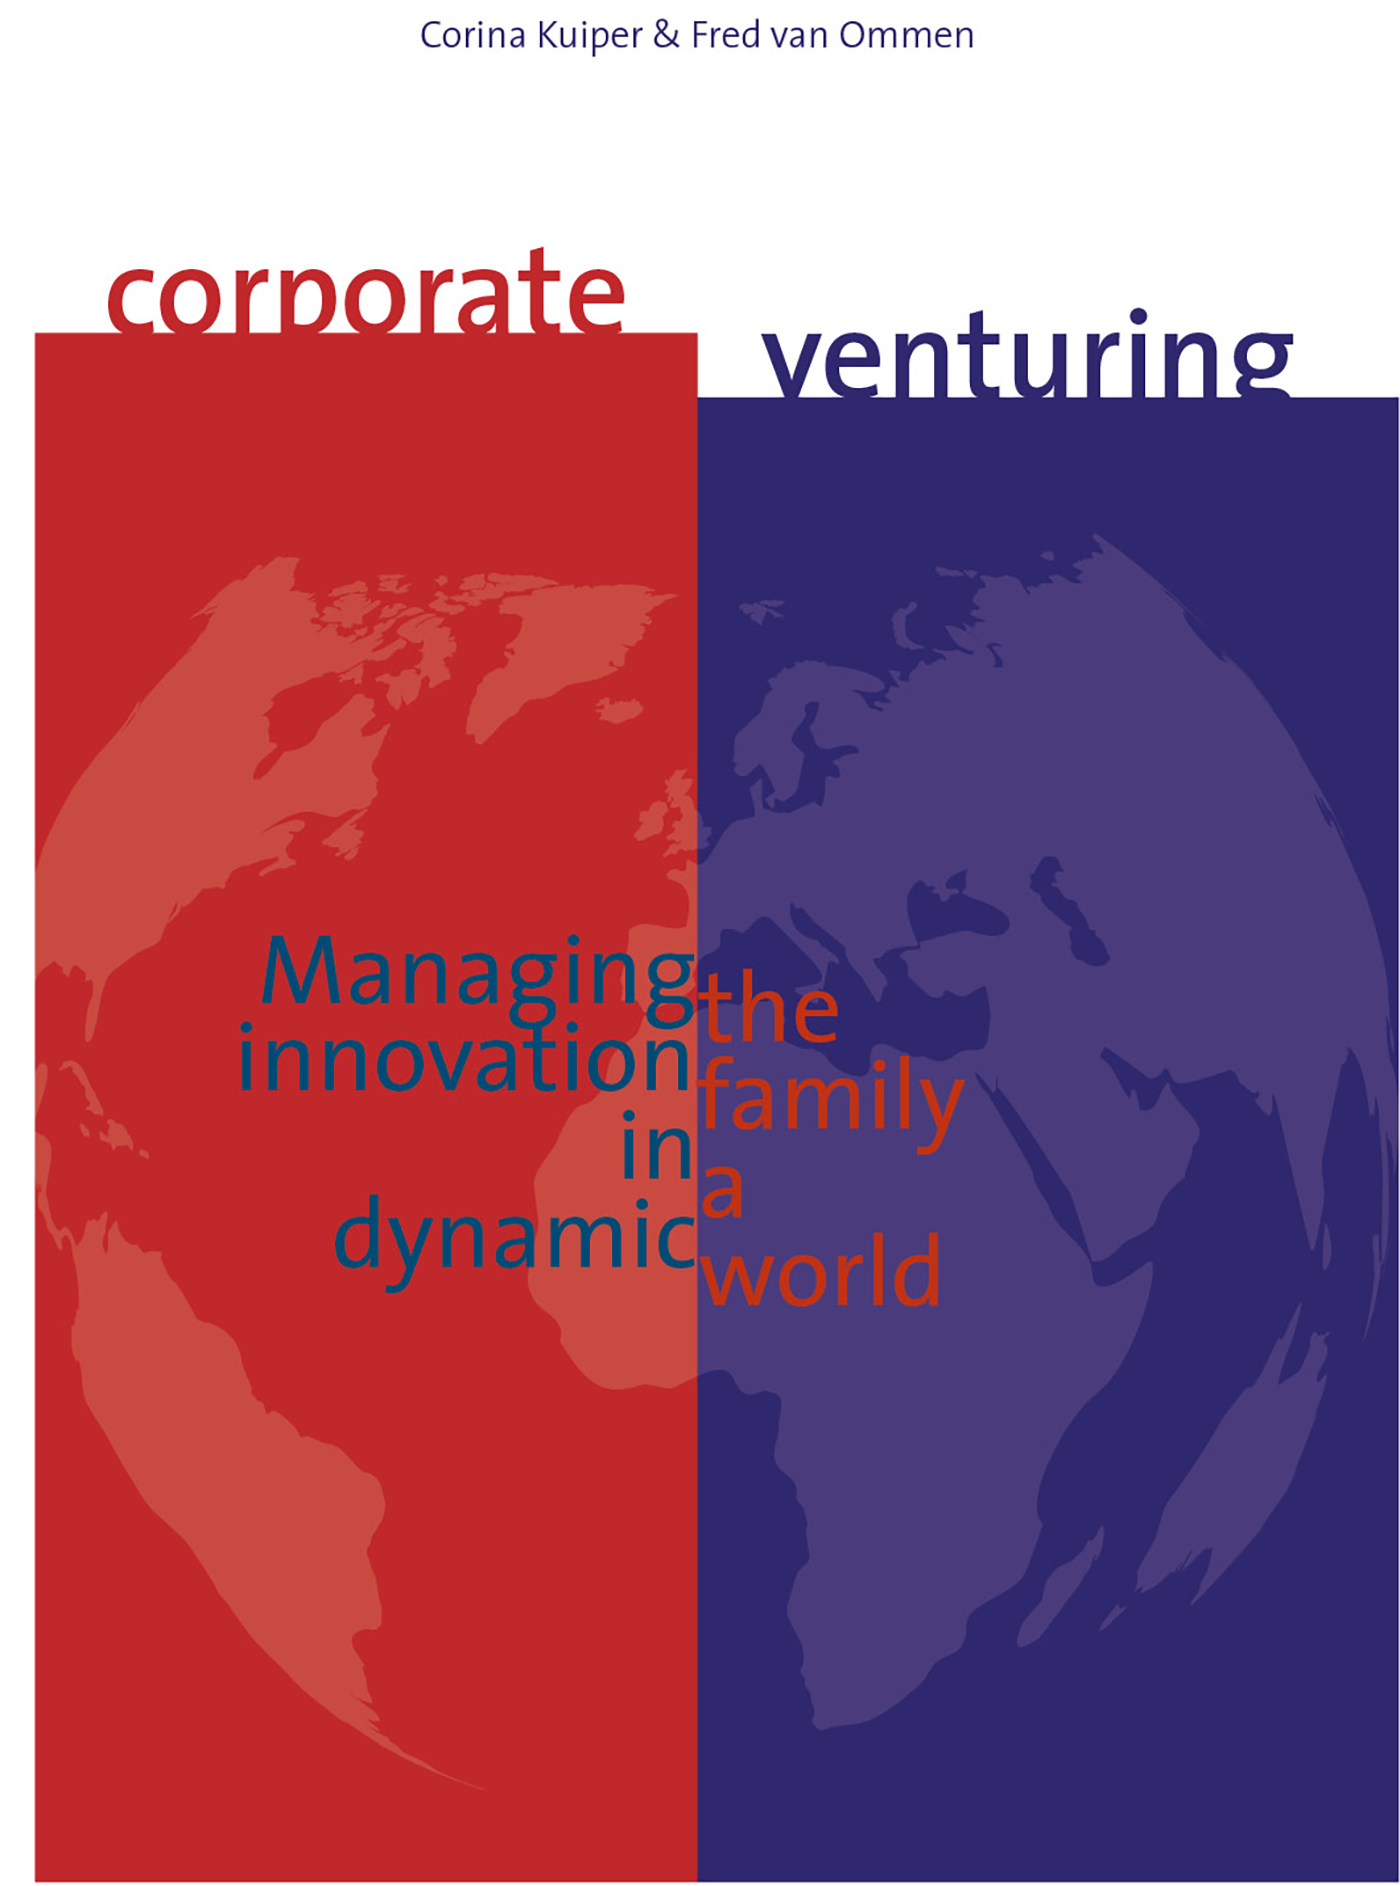 Corporate venturing (Ebook)